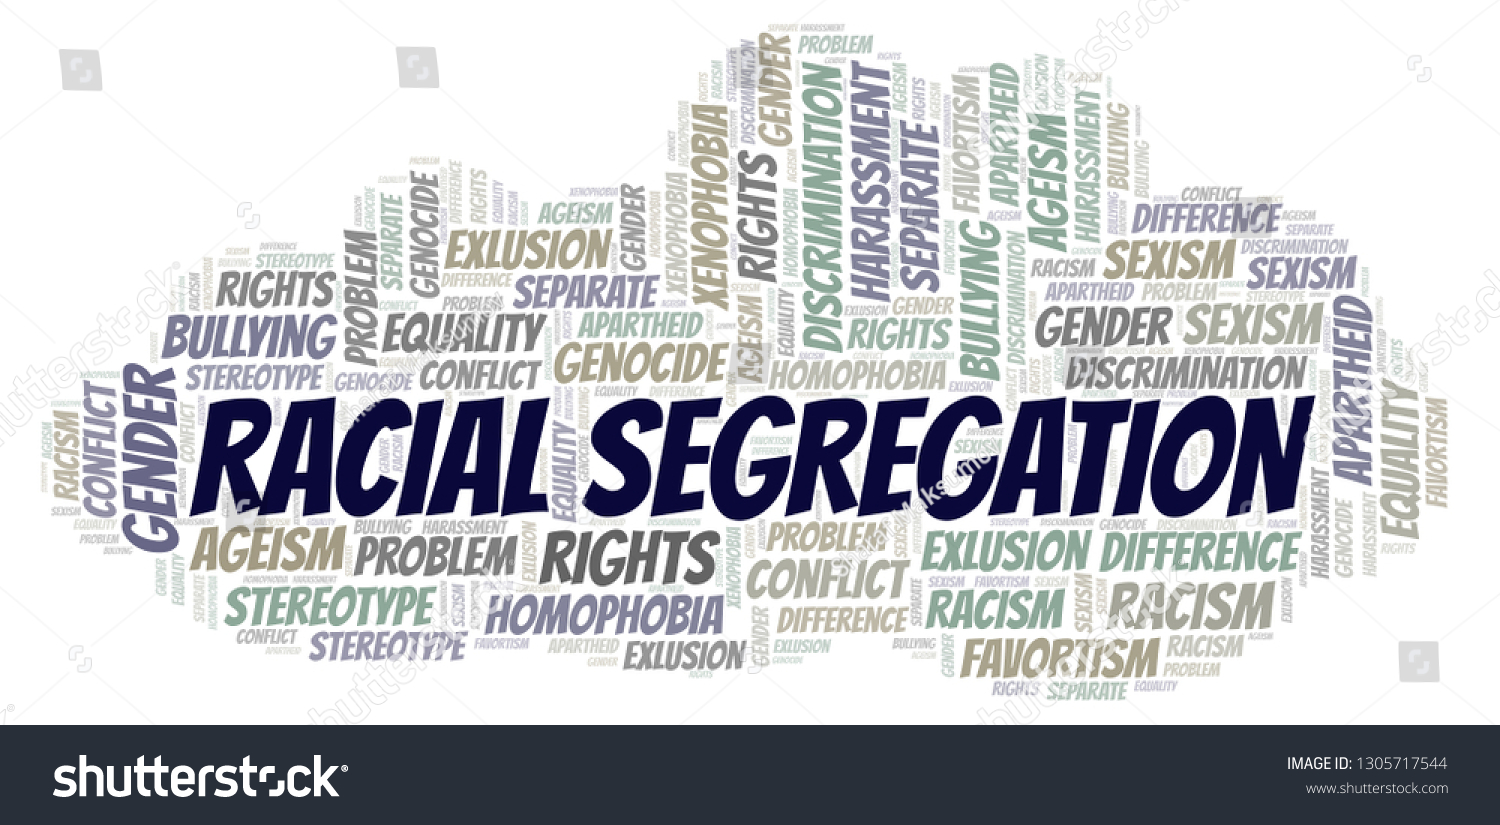 Racial Segregation Type Discrimination Word Cloud Stock Illustration 1305717544 Shutterstock 2544